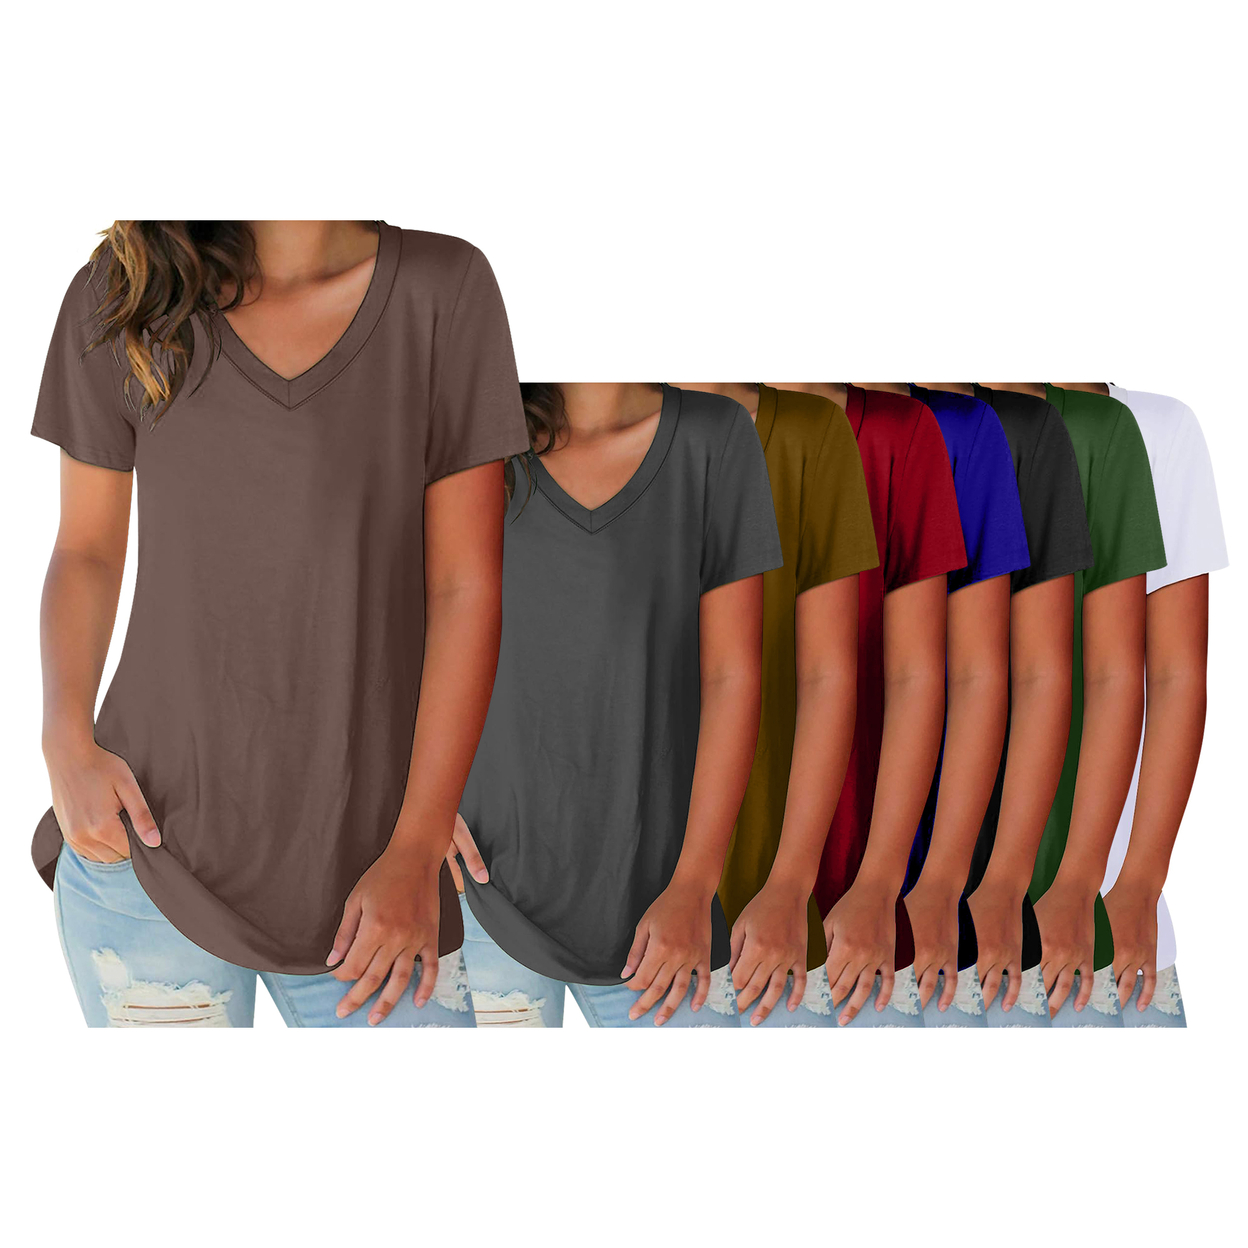 Women's Ultra-Soft Smooth Cotton Blend Basic V-Neck Short Sleeve Shirts - Red, Large